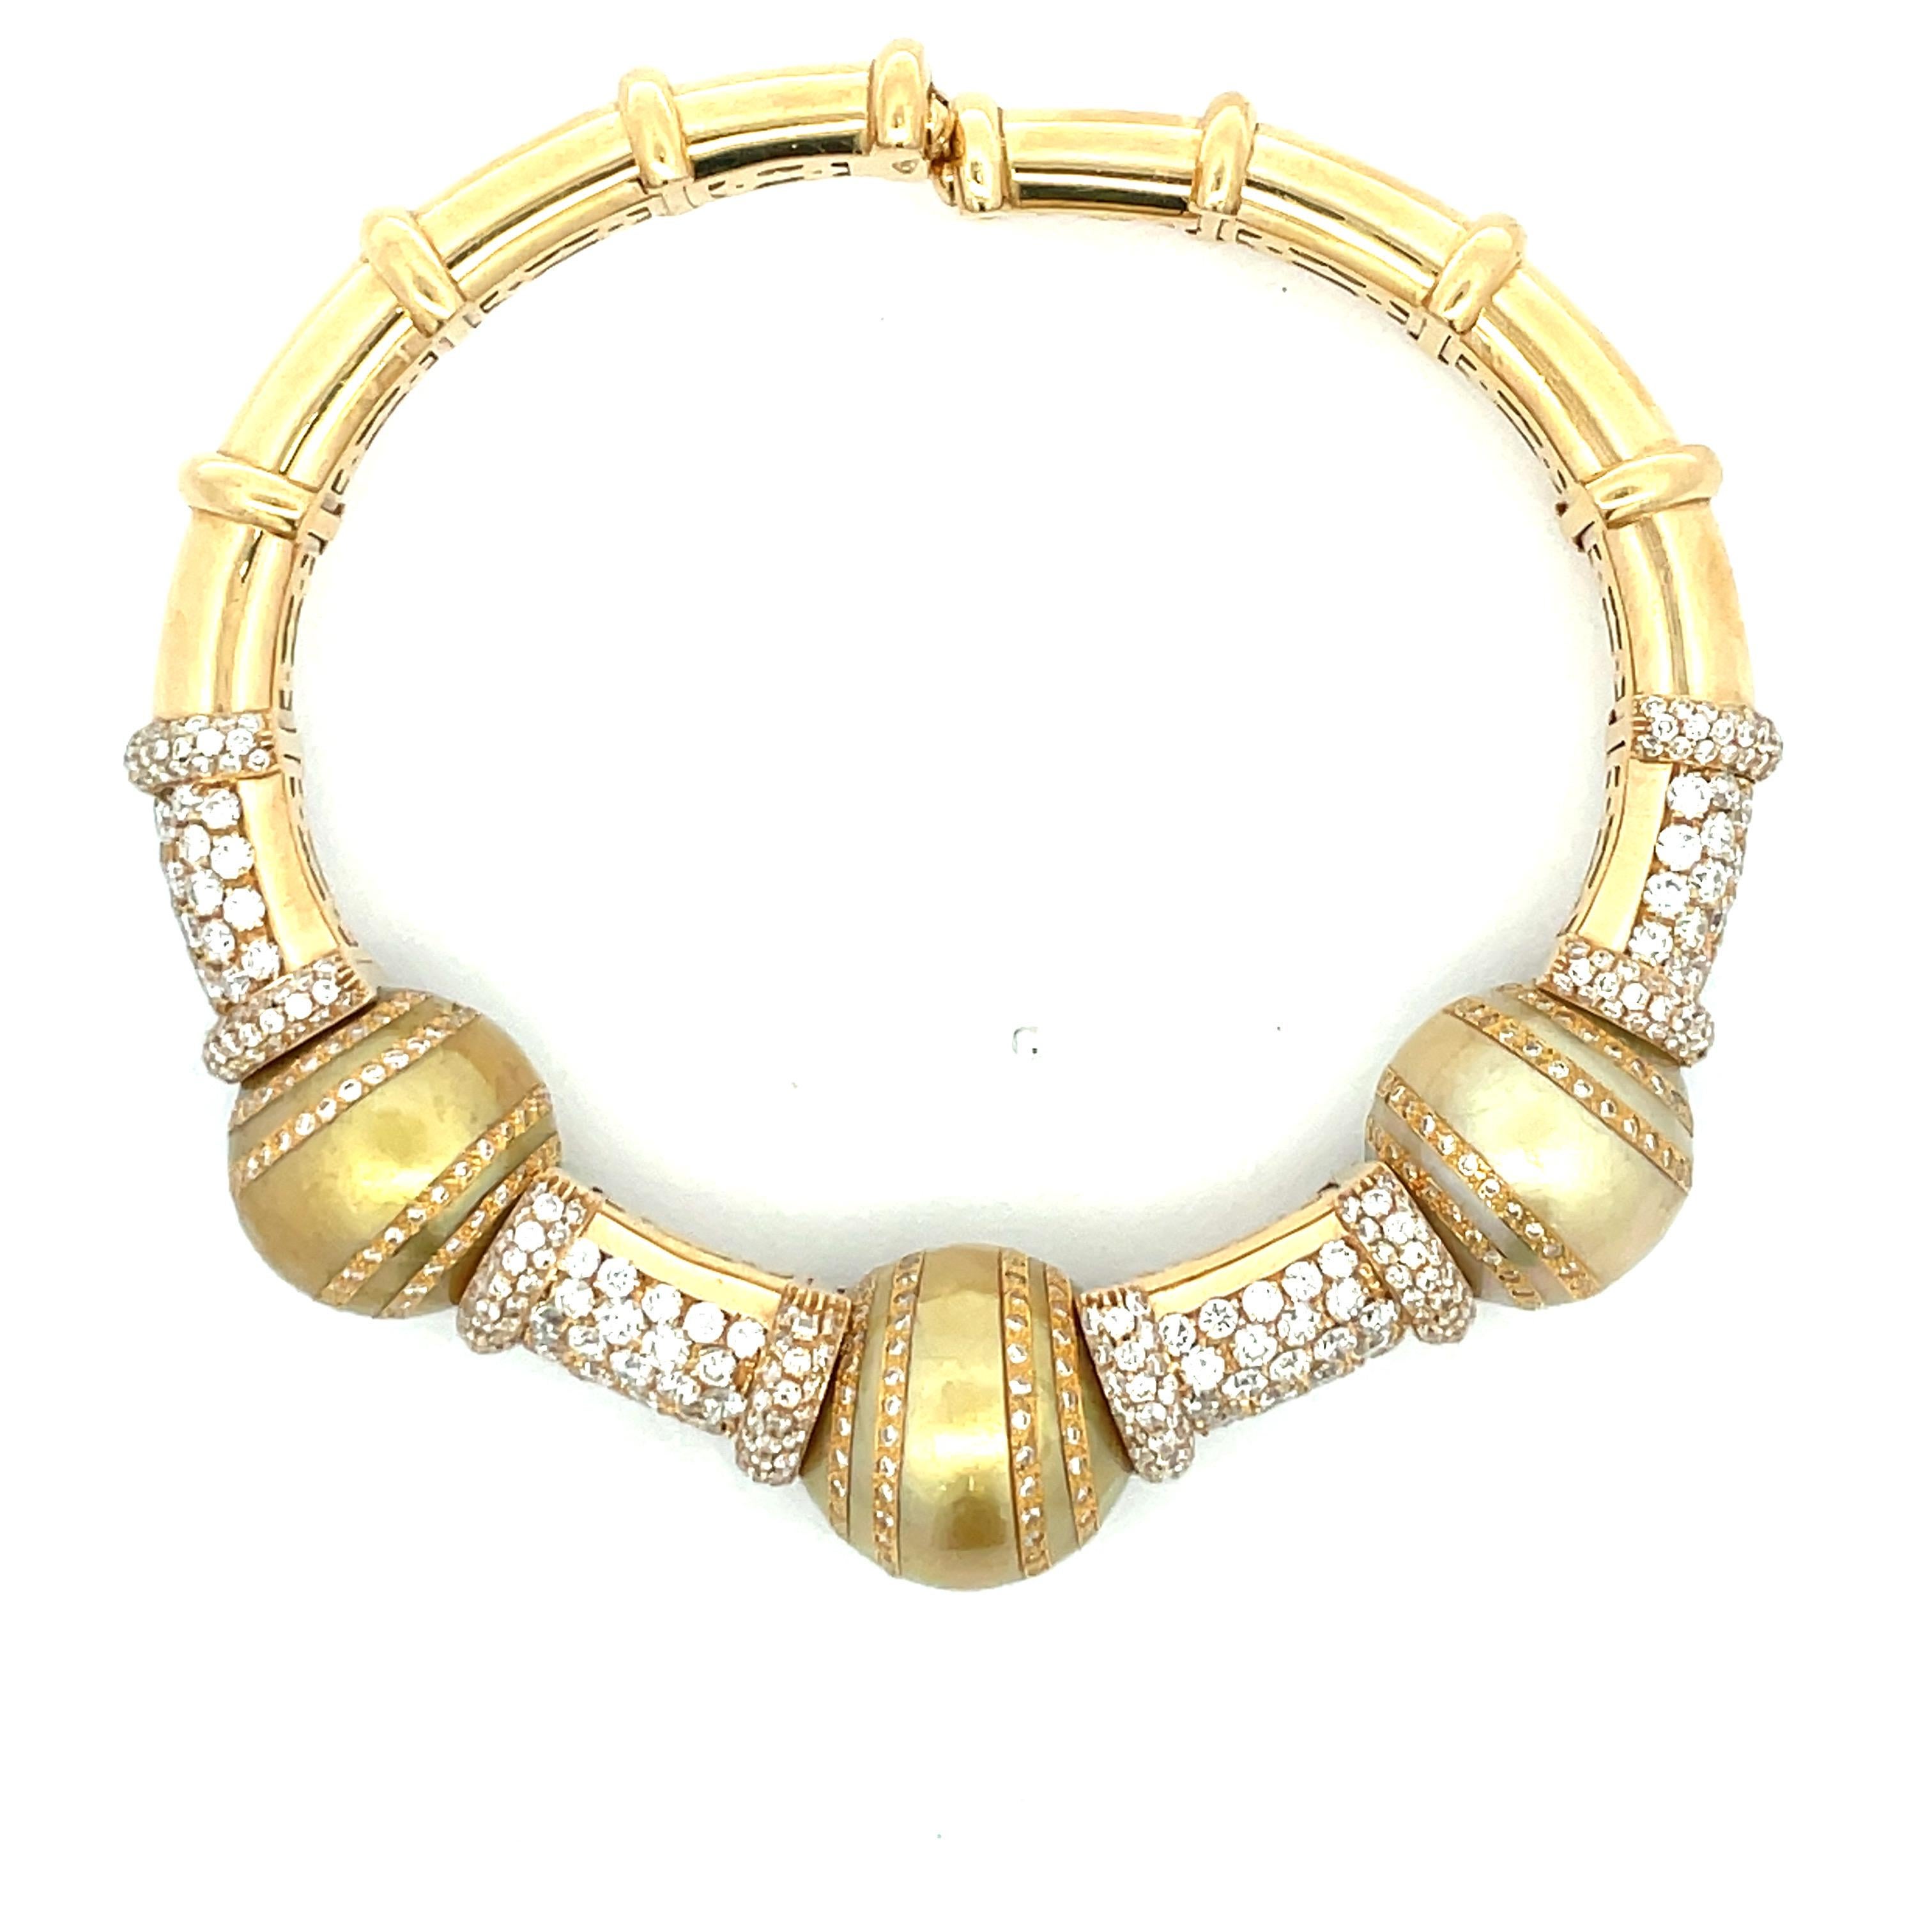 Contemporary VERDI Italian Golden South Sea Pearl Diamond Bangle 8.58 Carats 18 Karat Gold